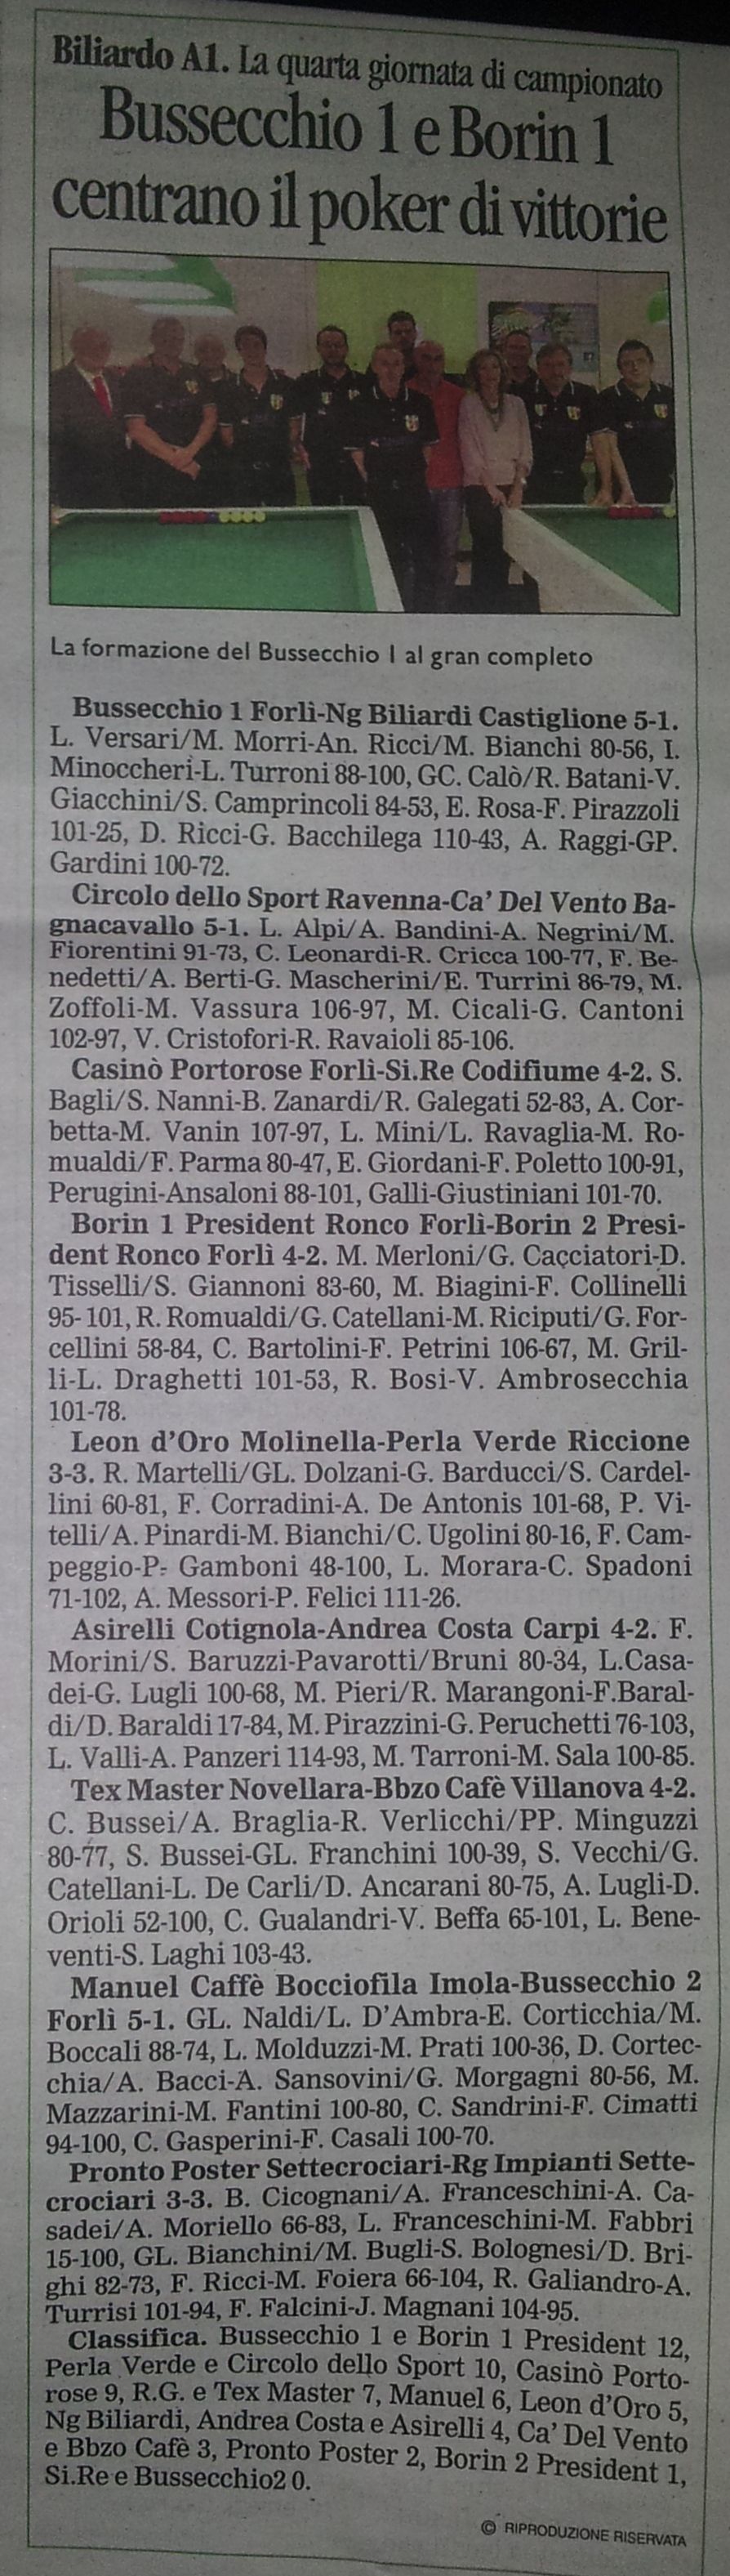 Corriere Romagna 8 ottobre 2016